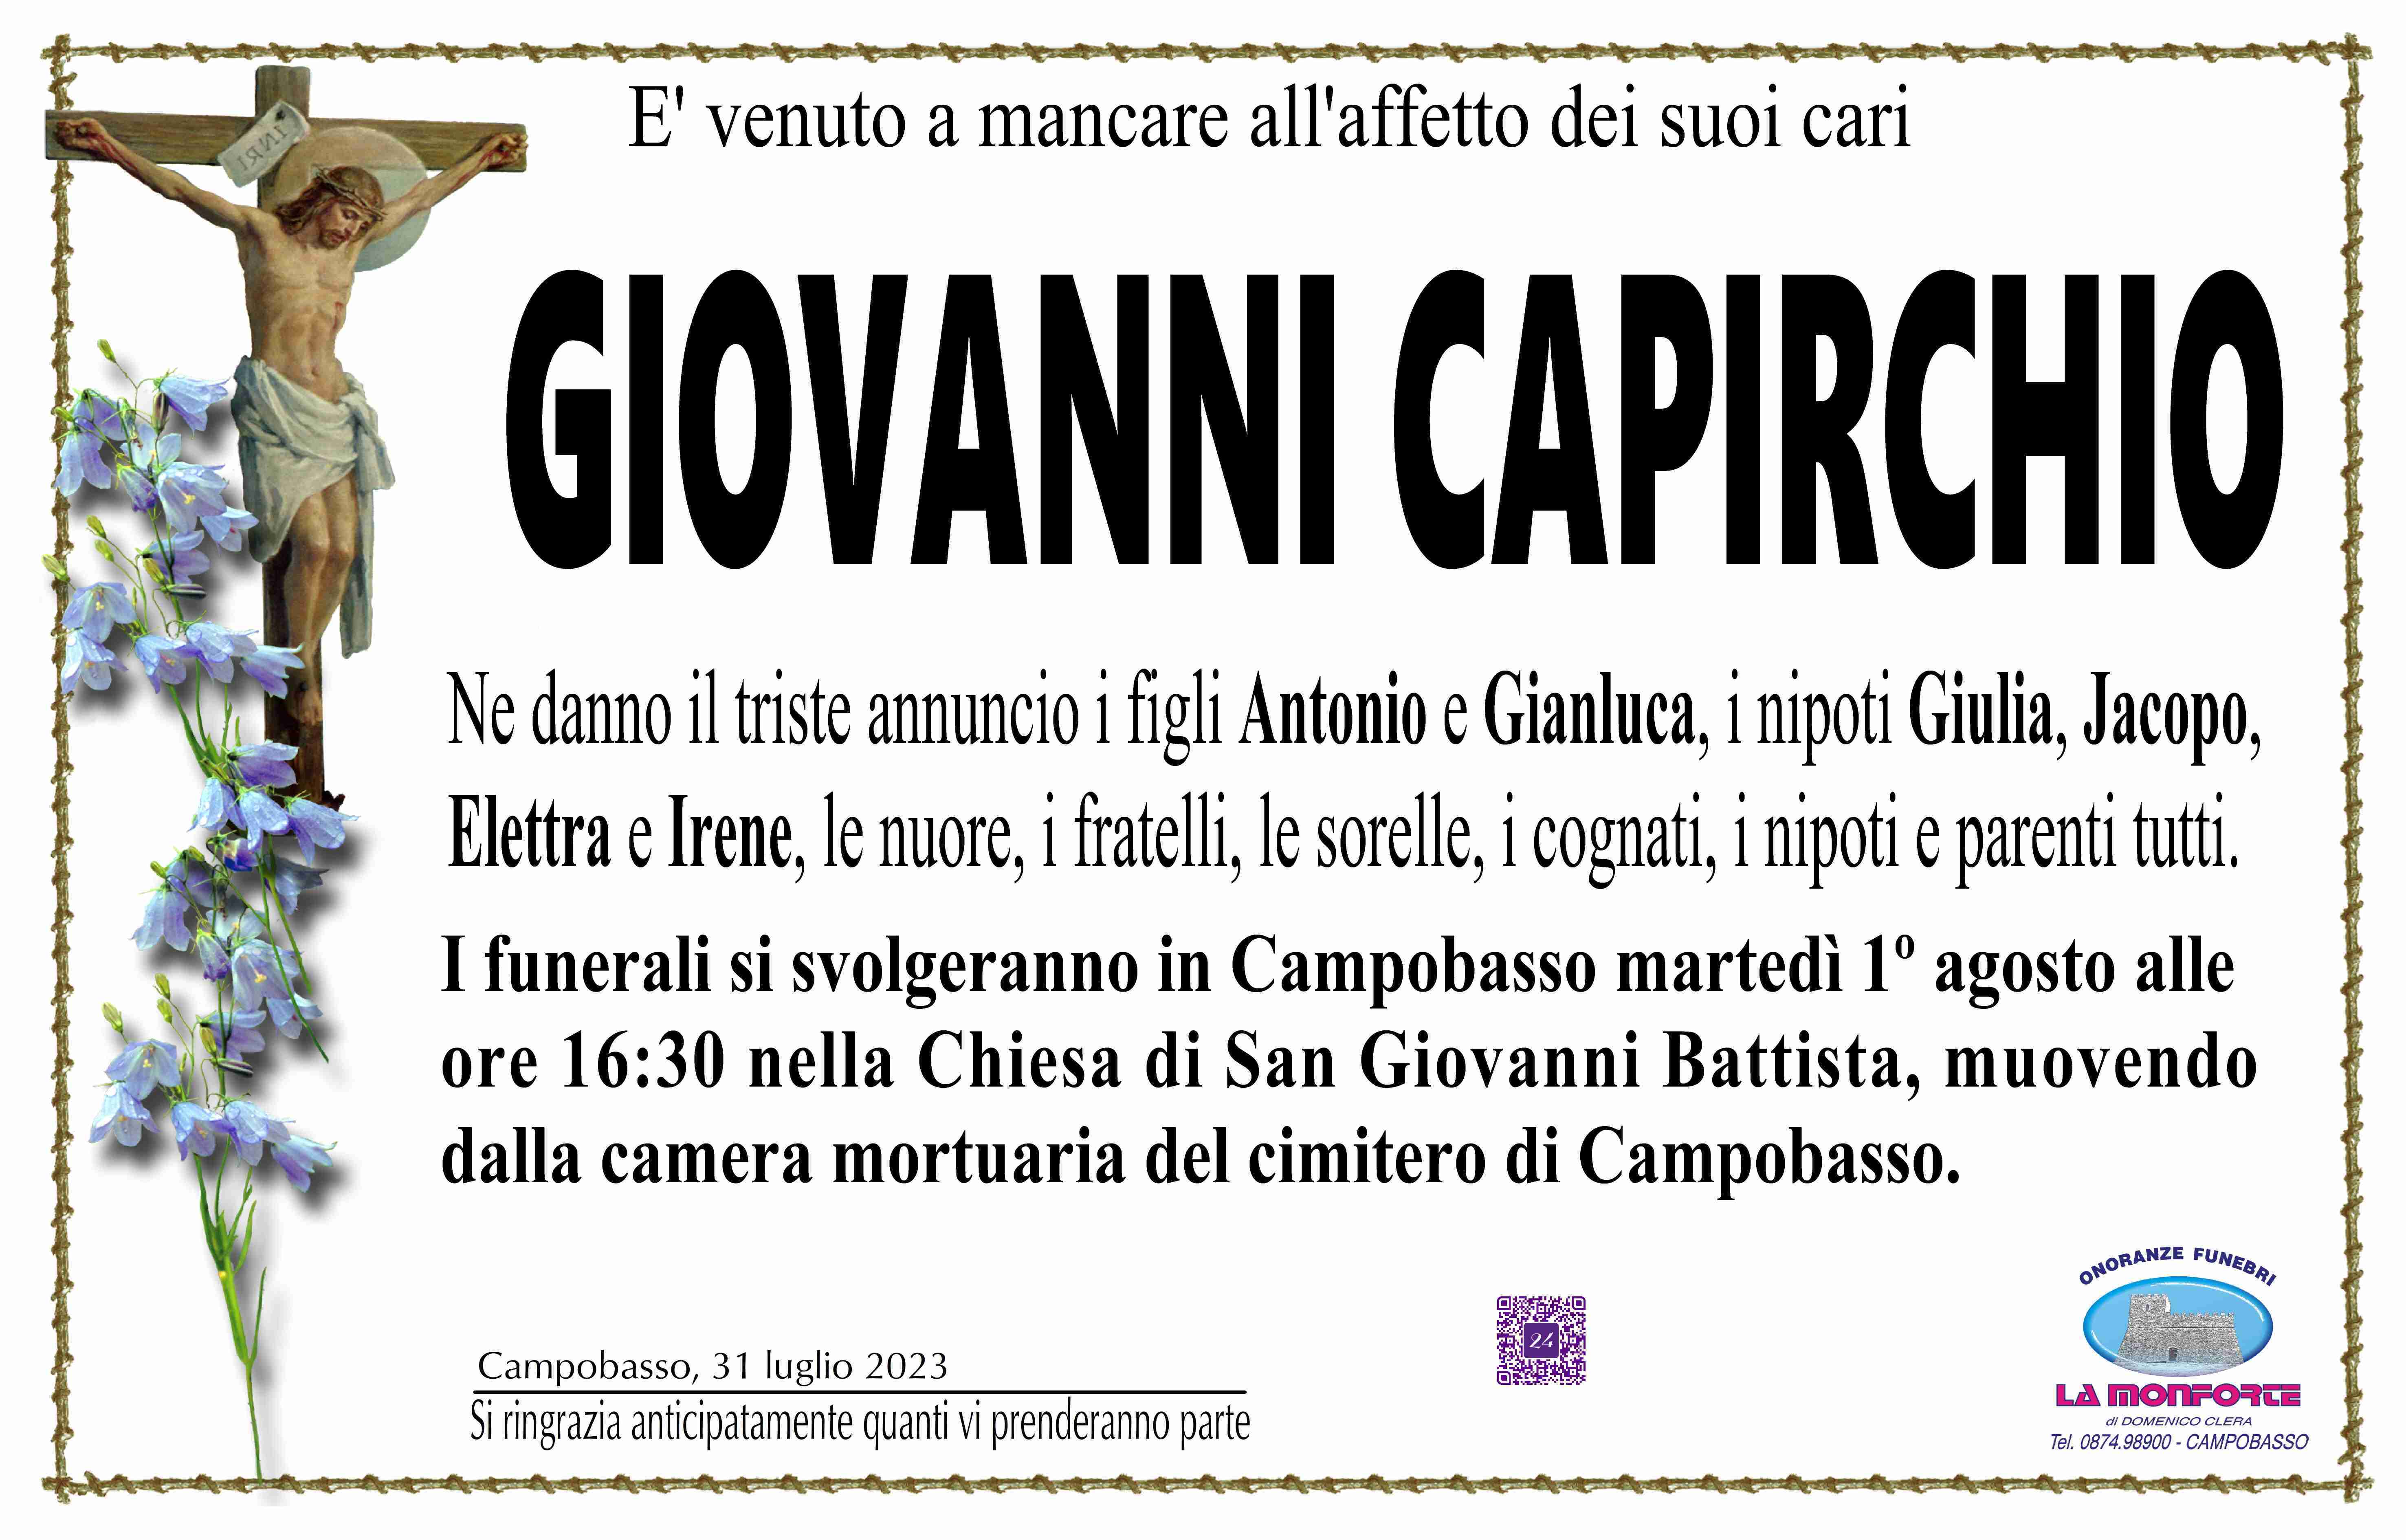 Giovanni Capirchio